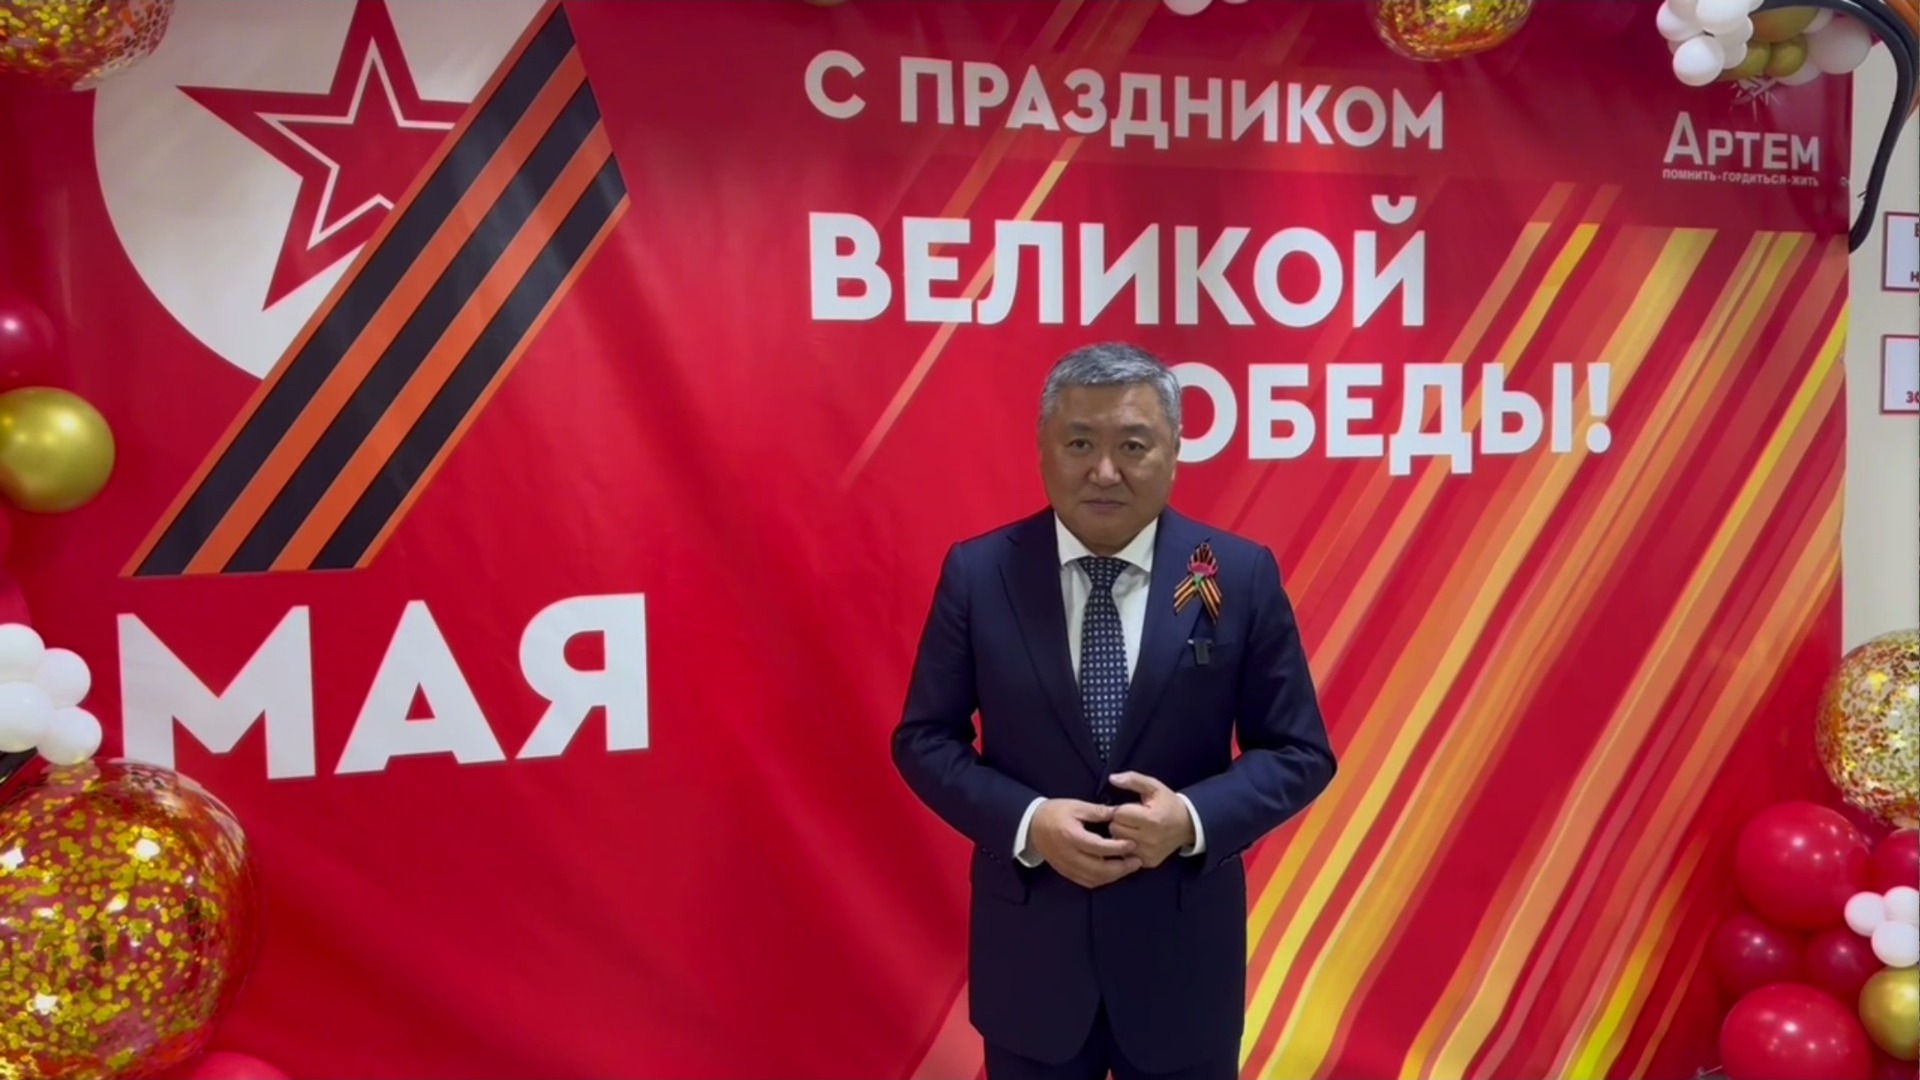 Поздравление мэра города Артёма Вячеслава Квона с Днём Победы — видео